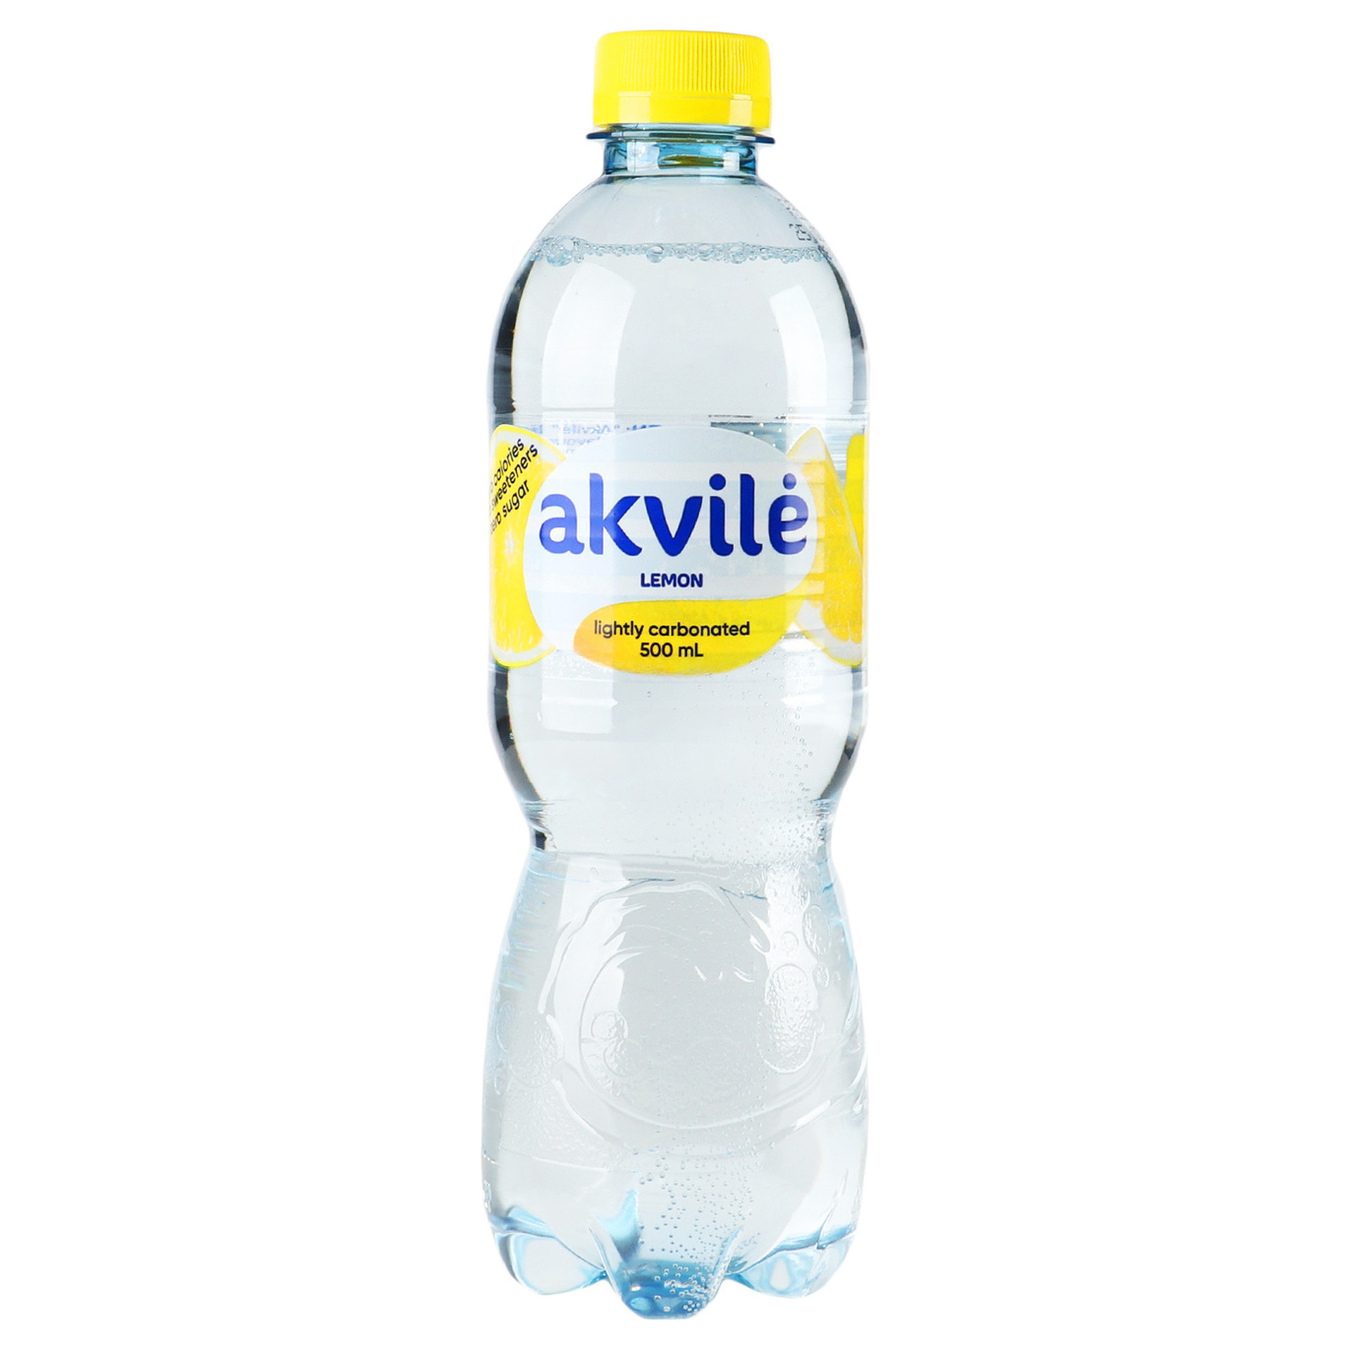 Akvile lemon slightly carbonated water 0.5 l